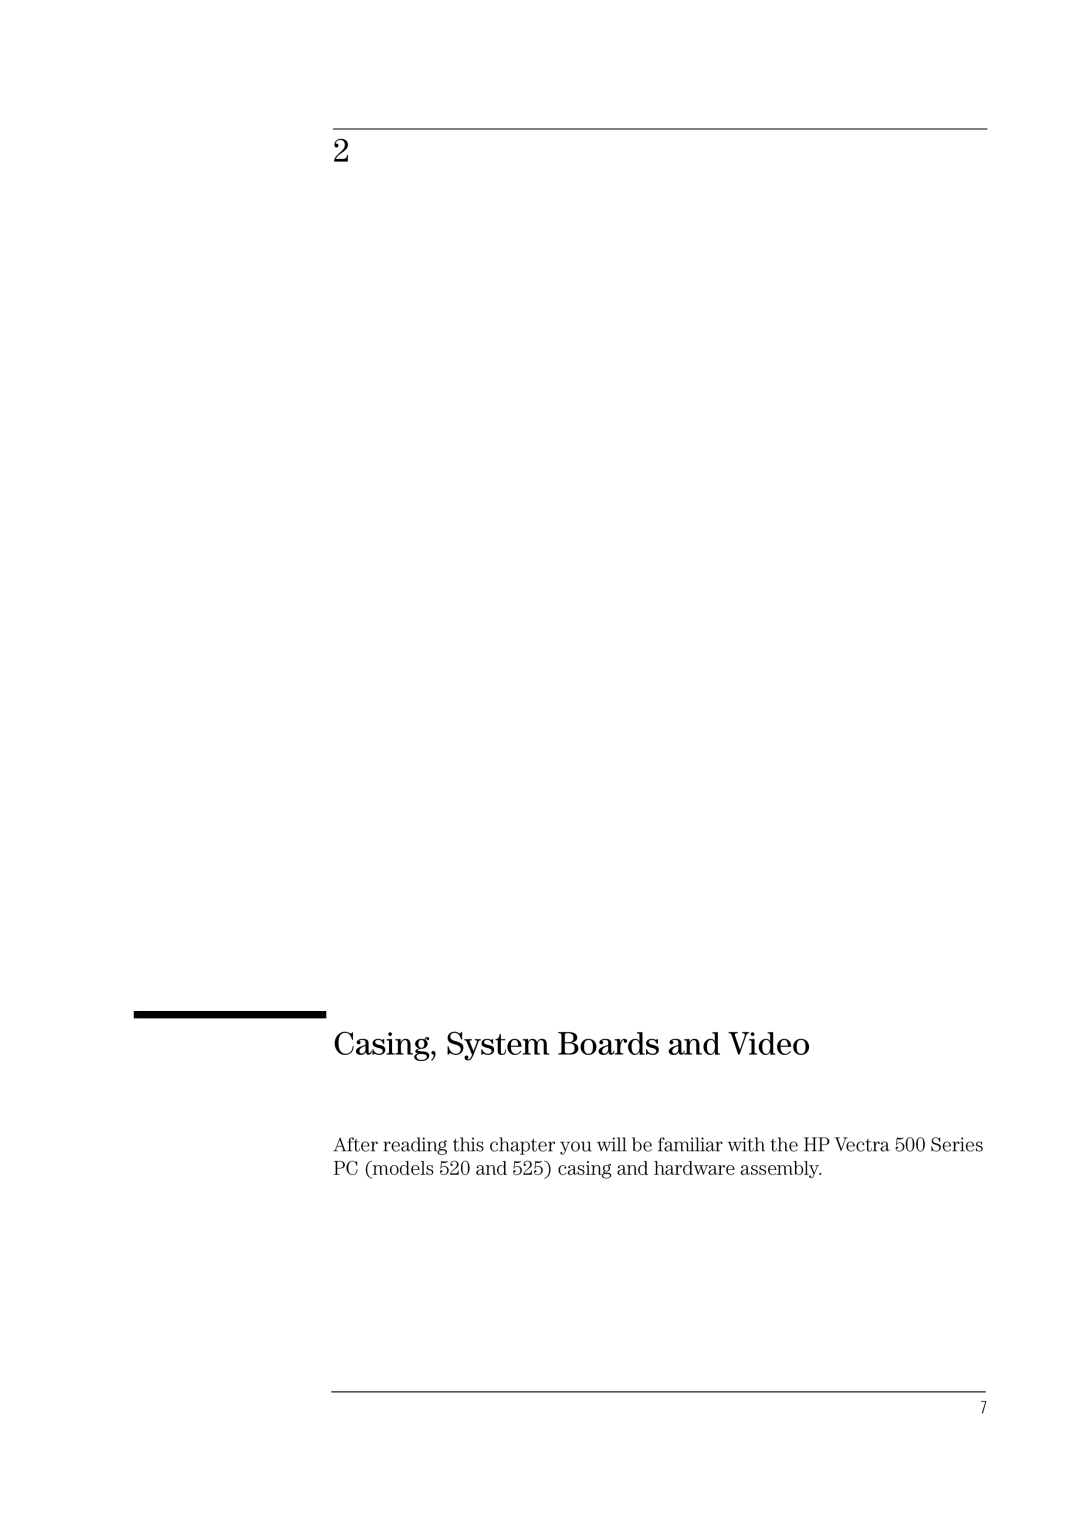 Verbatim 520, 525 manual Casing, System Boards and Video 